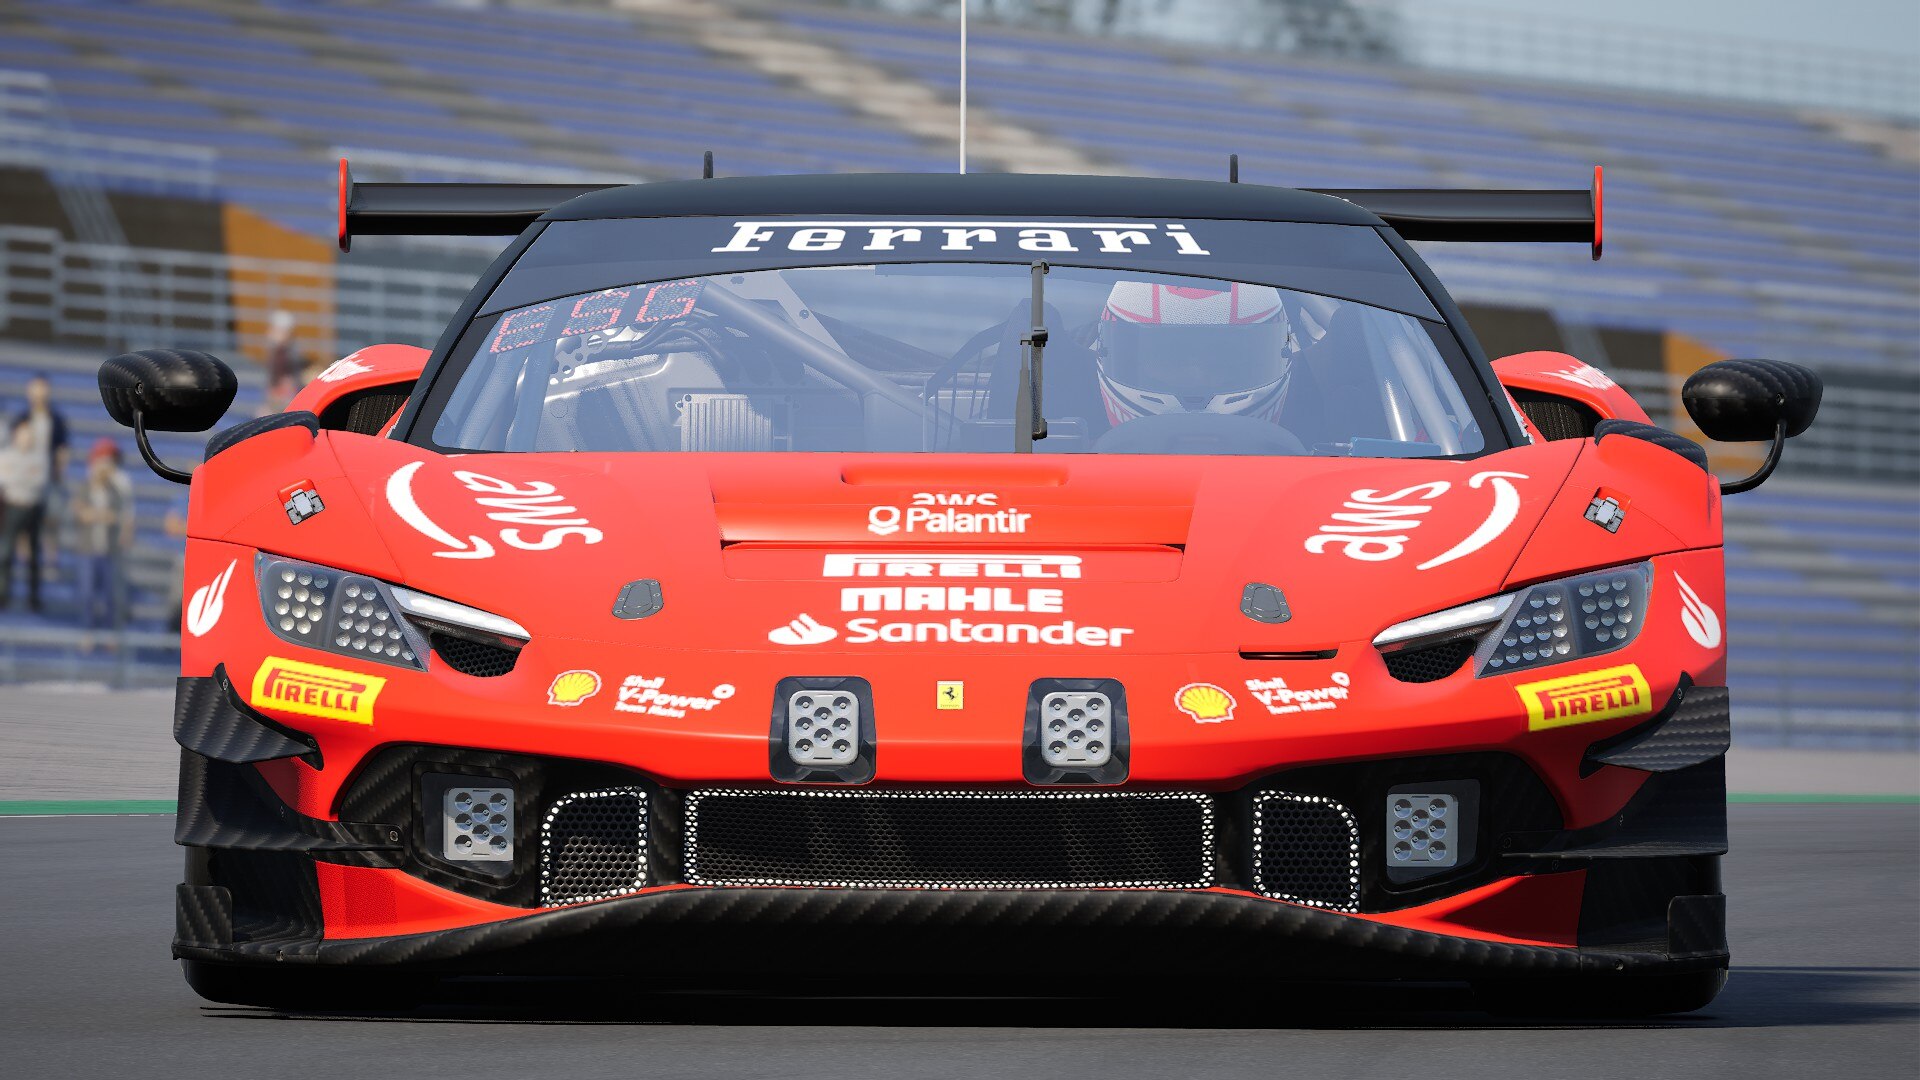 Race Cars GT3 Racing Ferrari Video Game Car Assetto Corsa Competizione Screen Shot Car Front Angle V 1920x1080